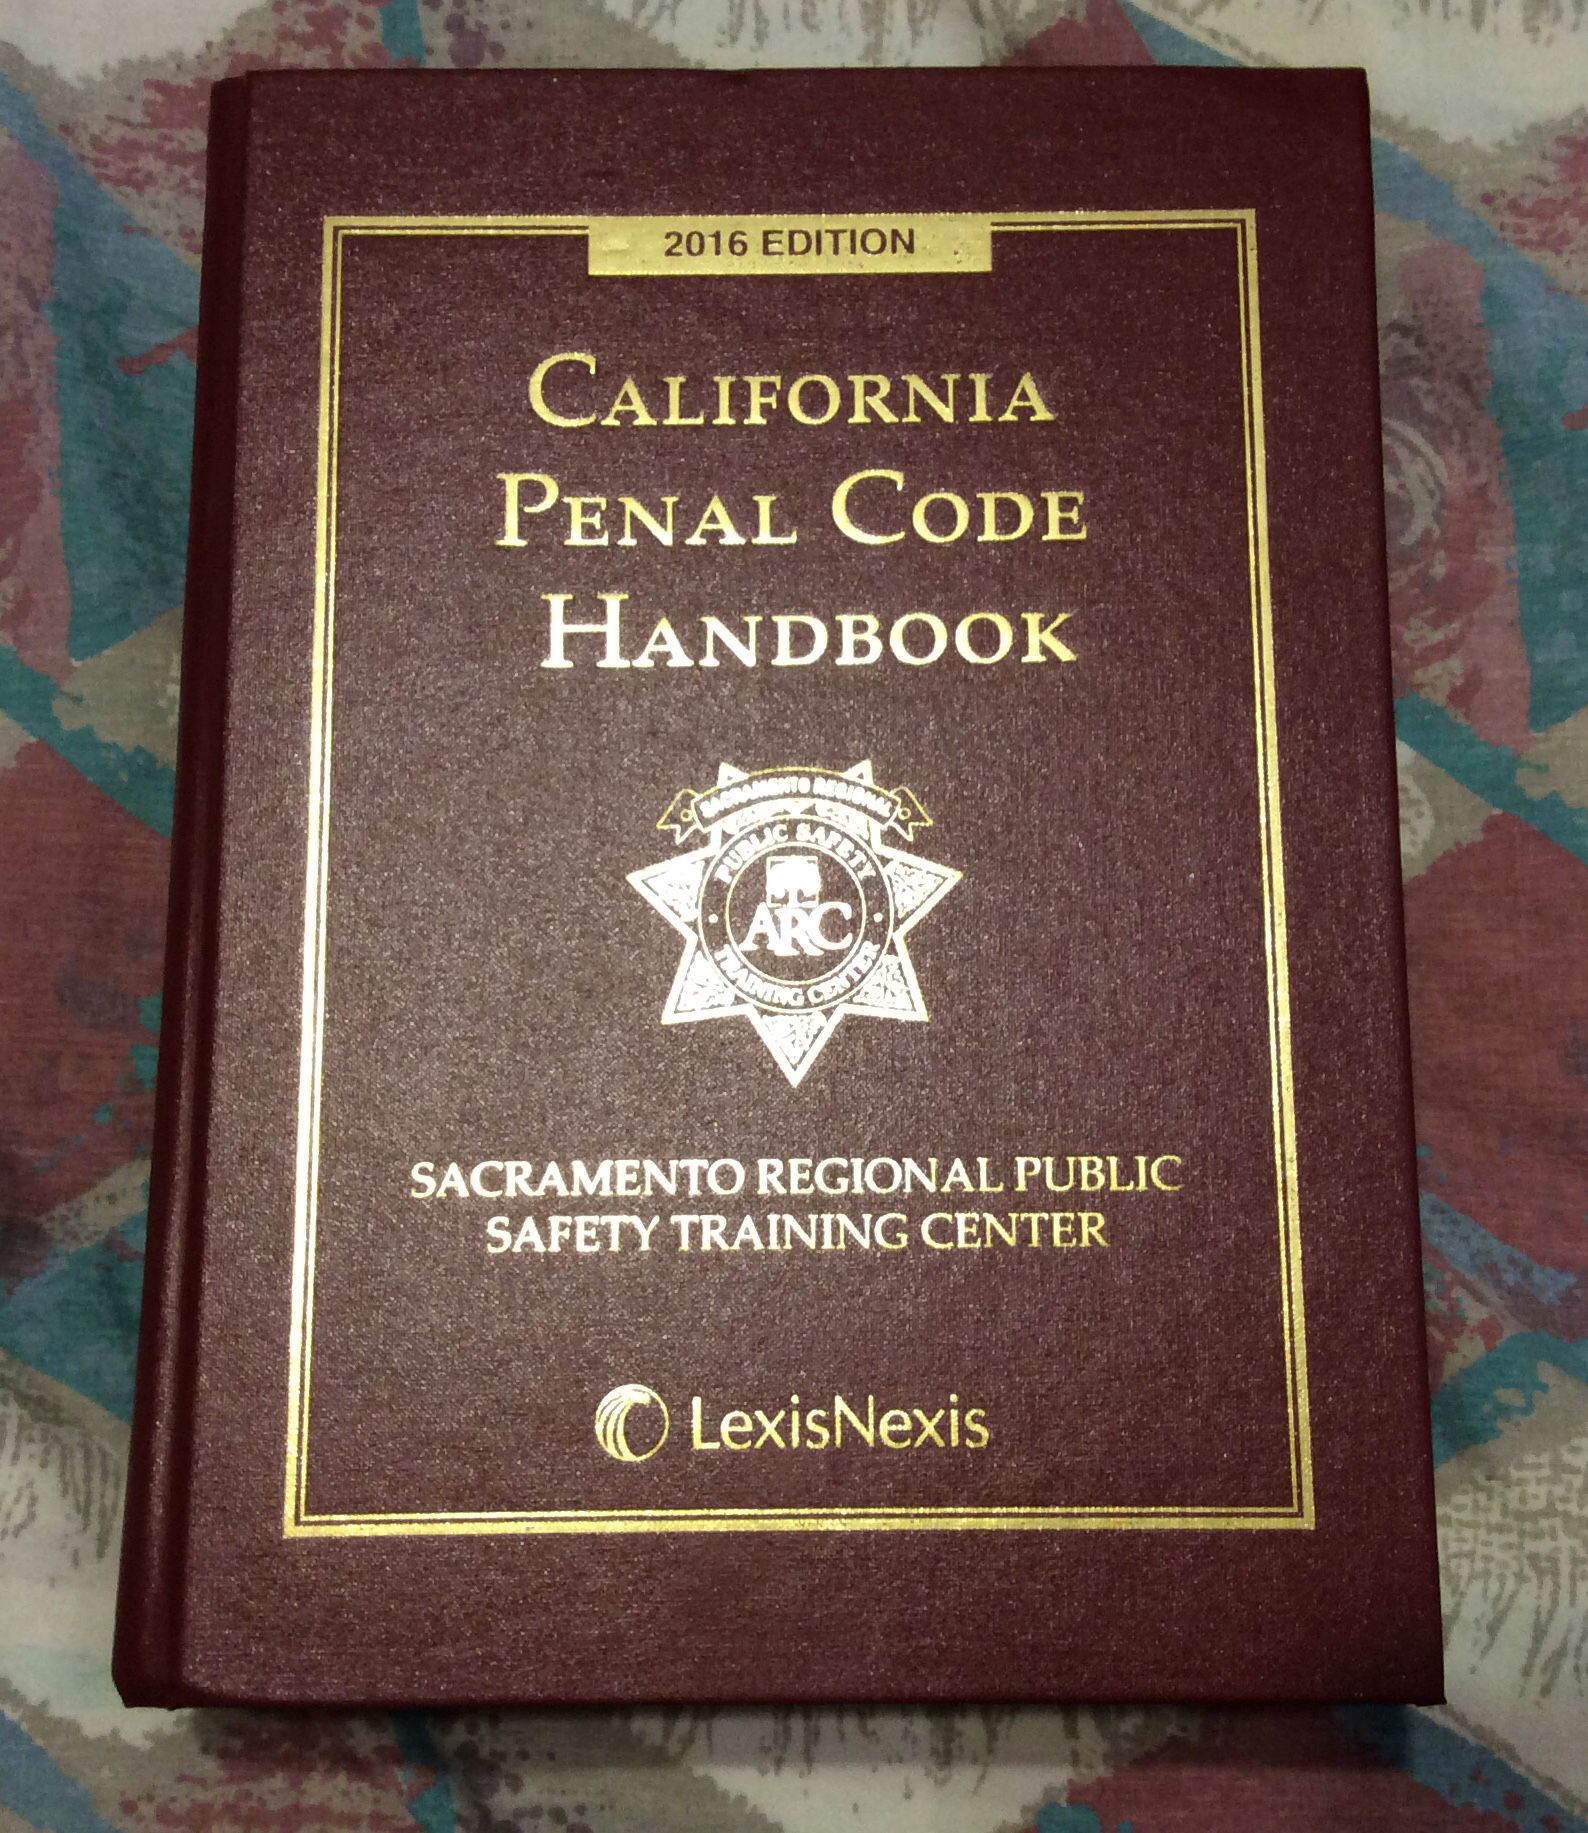 2016 Edition California Penal Code Handbook Sacramento Regional Public Safety Training Center